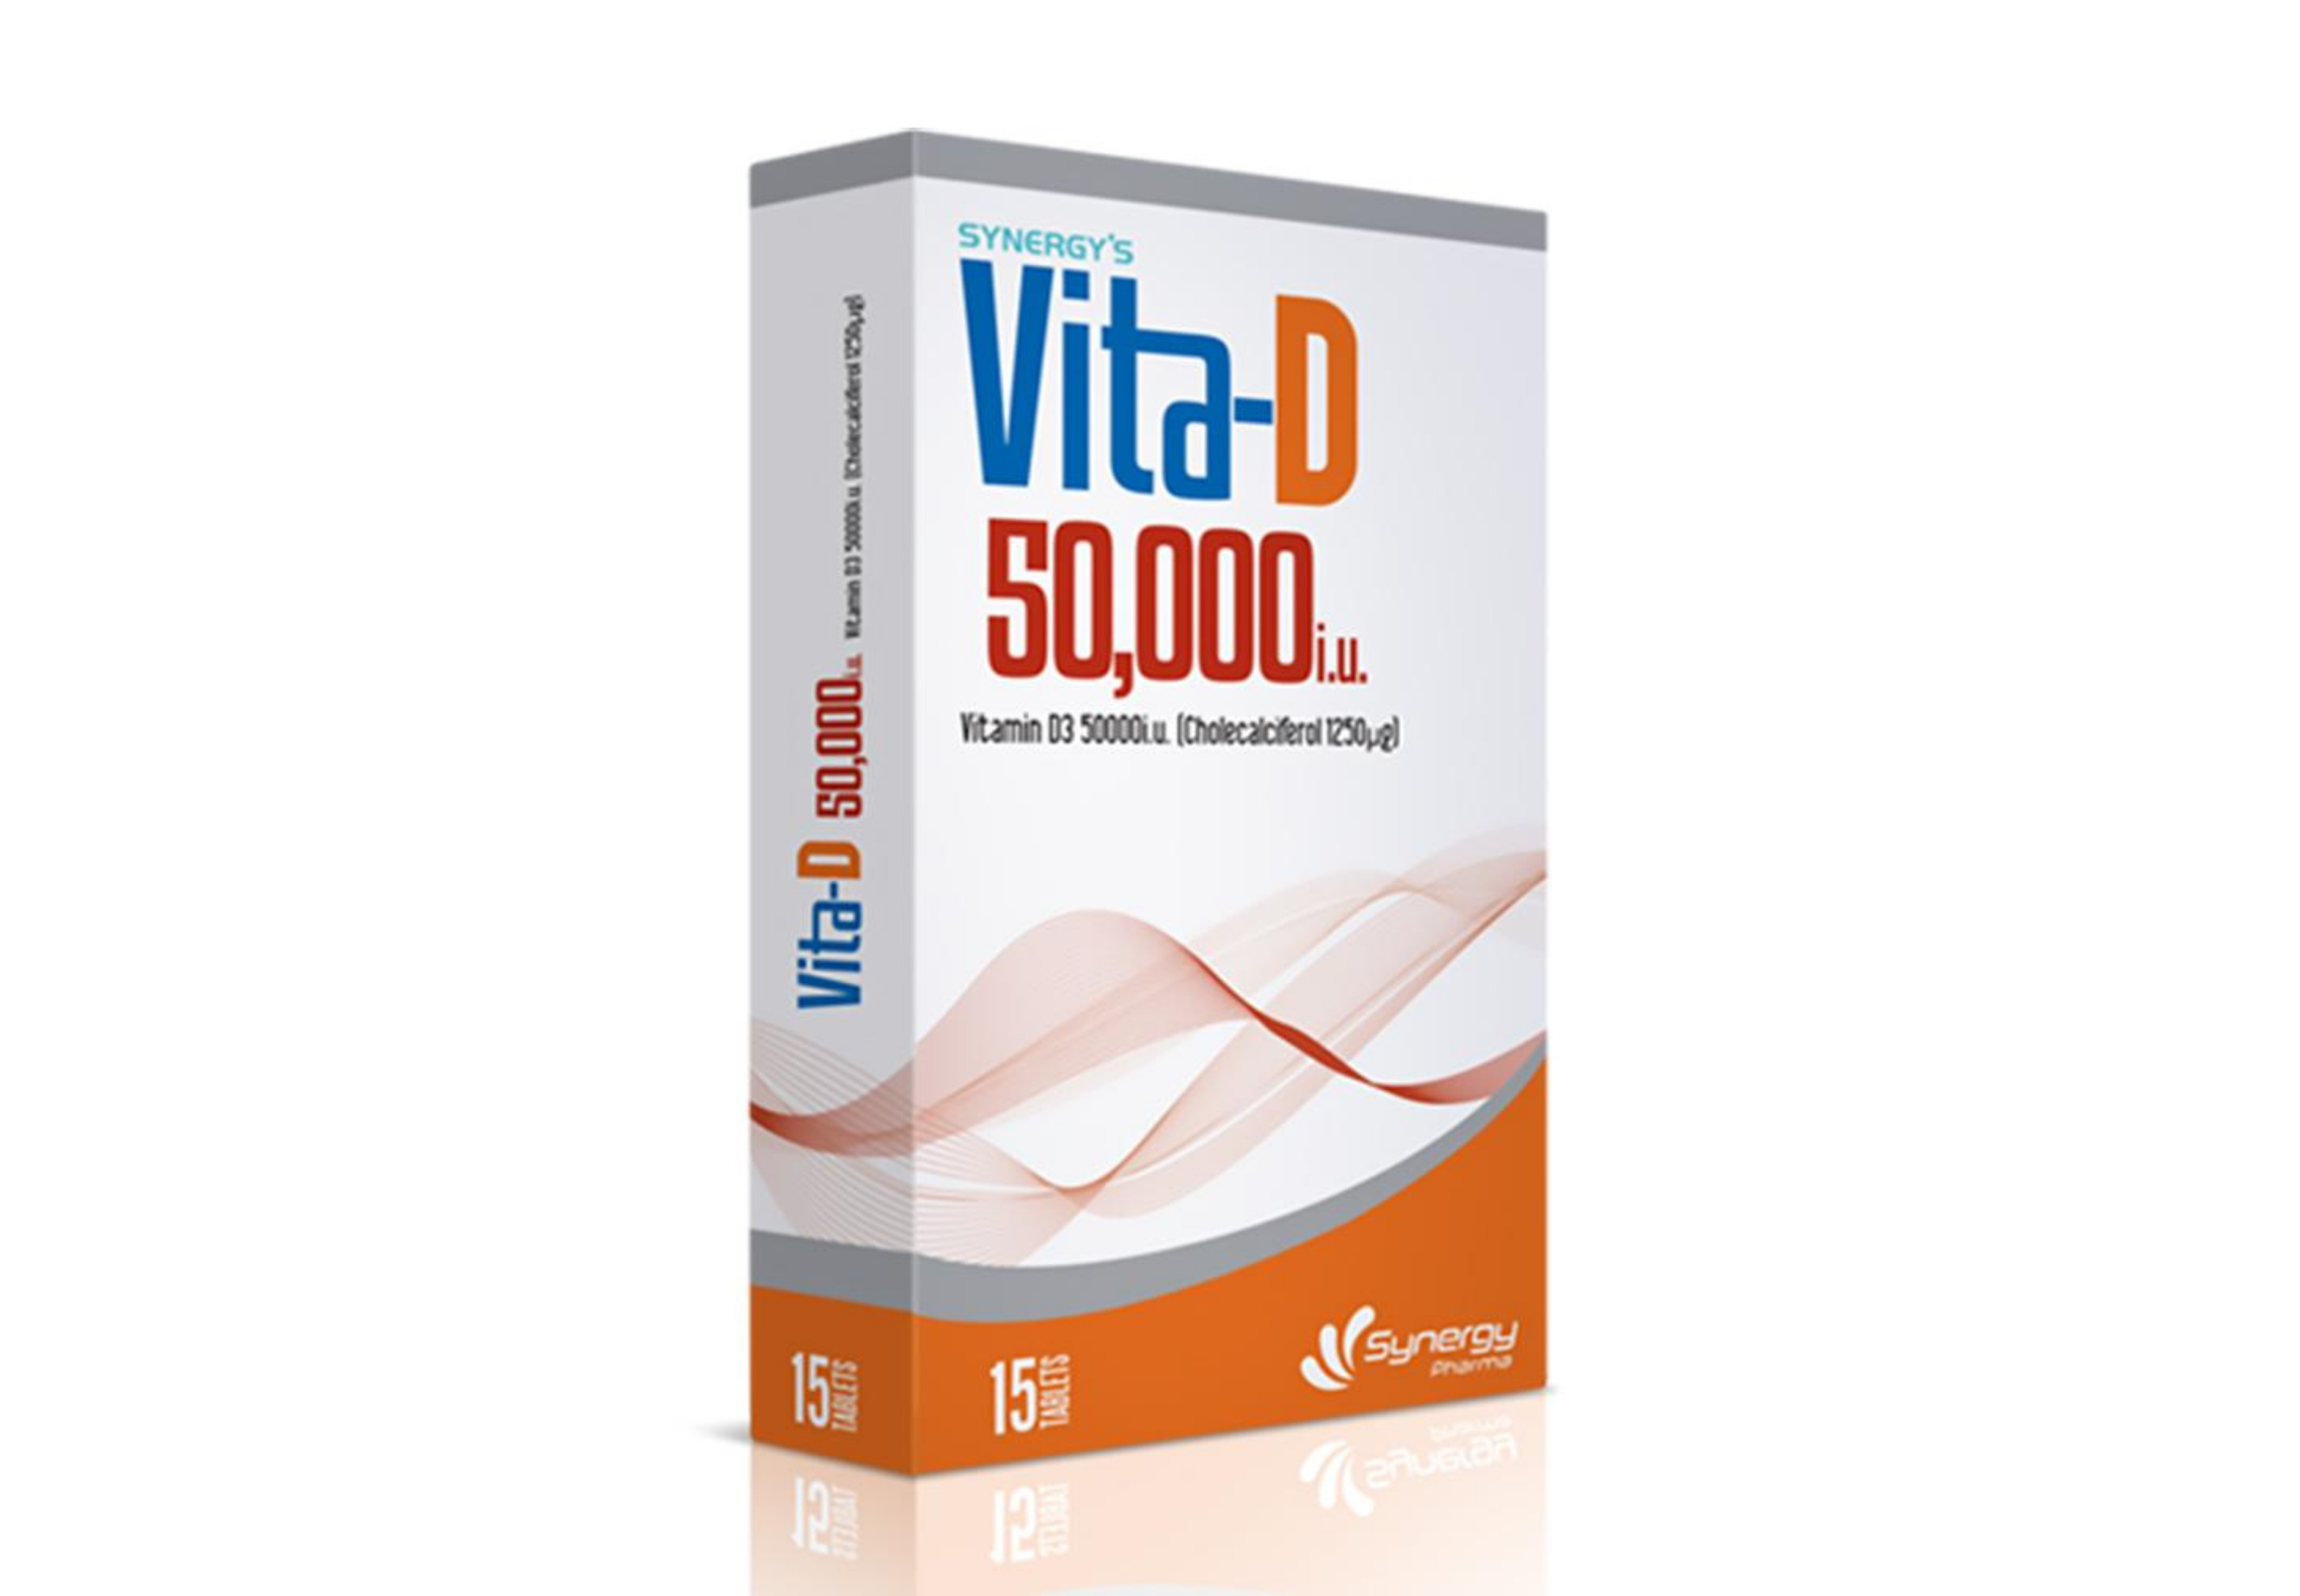 Synergy’s Vita-D 50,000 i.u, Tablets 15’s | Vitamins & Food Supplements ...